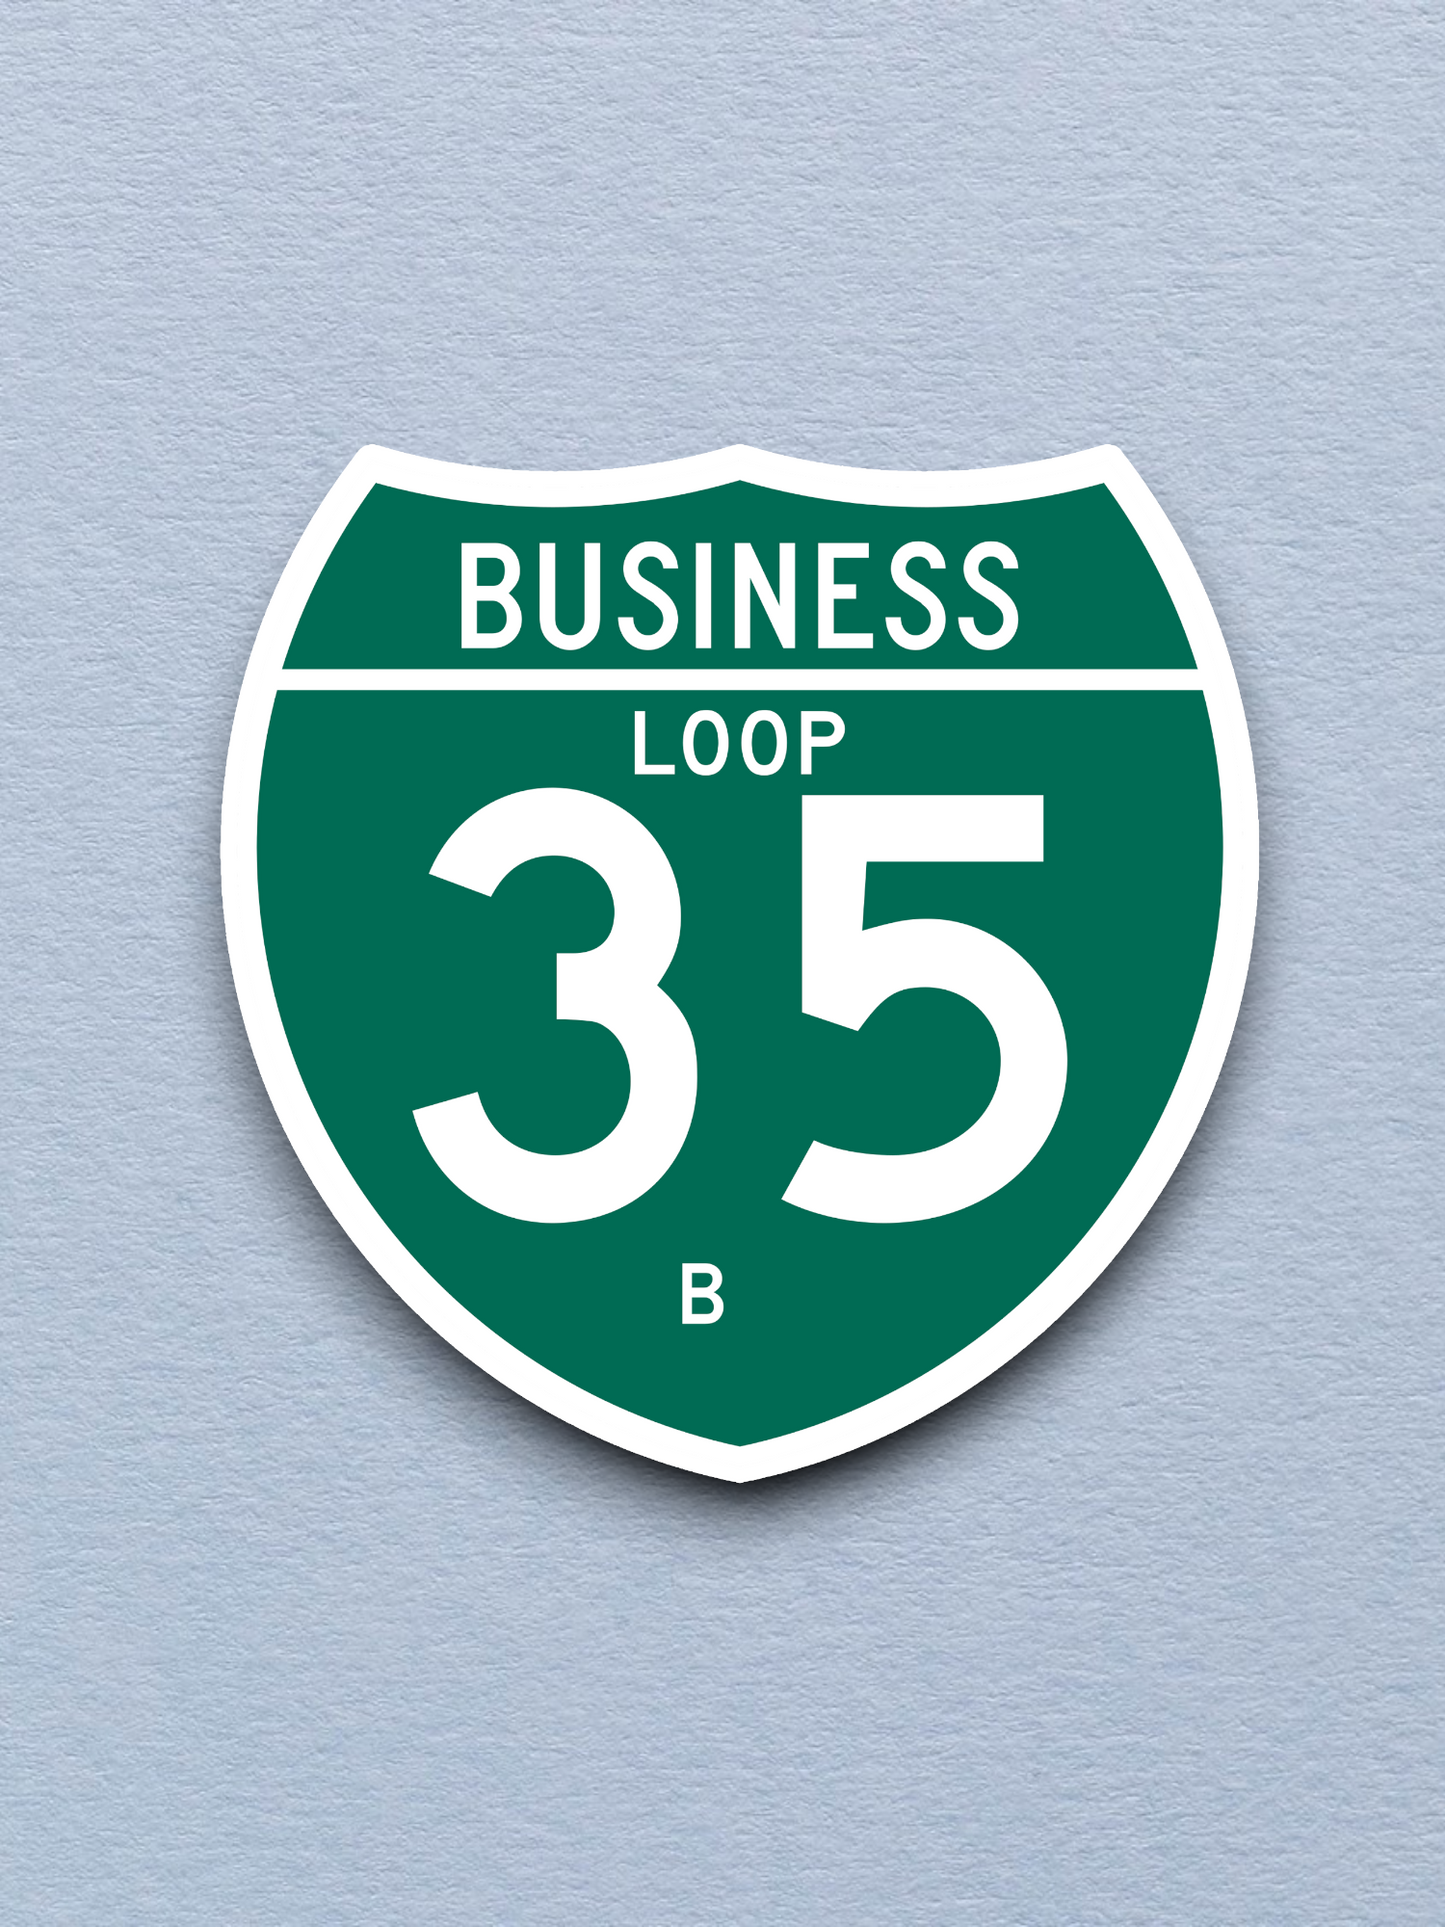 Business Spur Interstate 35-B Texas Road Sign Sticker